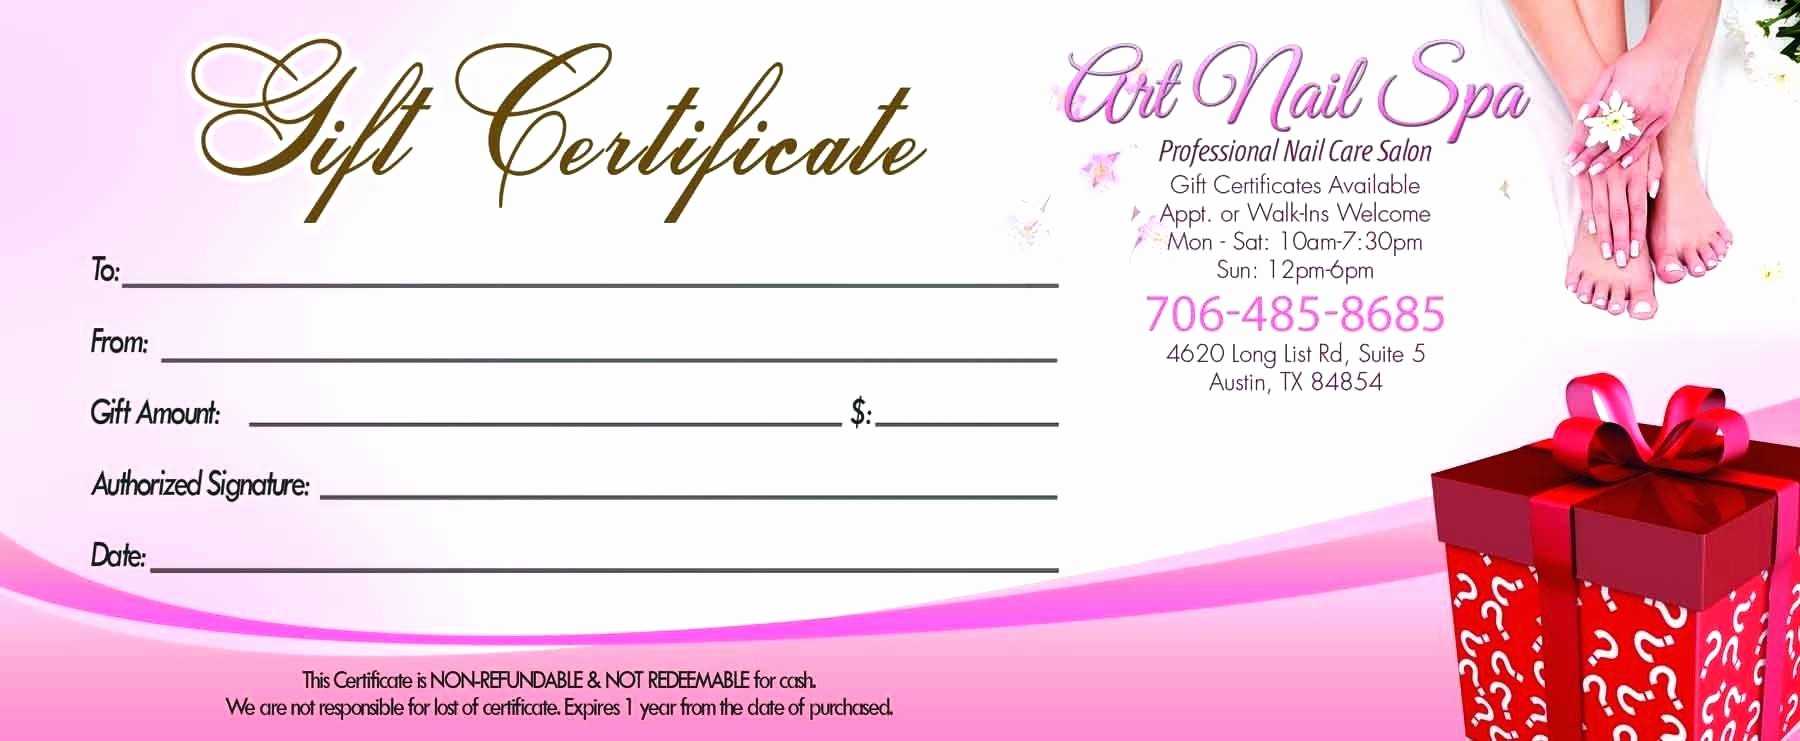 001 Salon Gift Certificate Templates Free Printable Hair Pertaining To Walking Certificate Templates